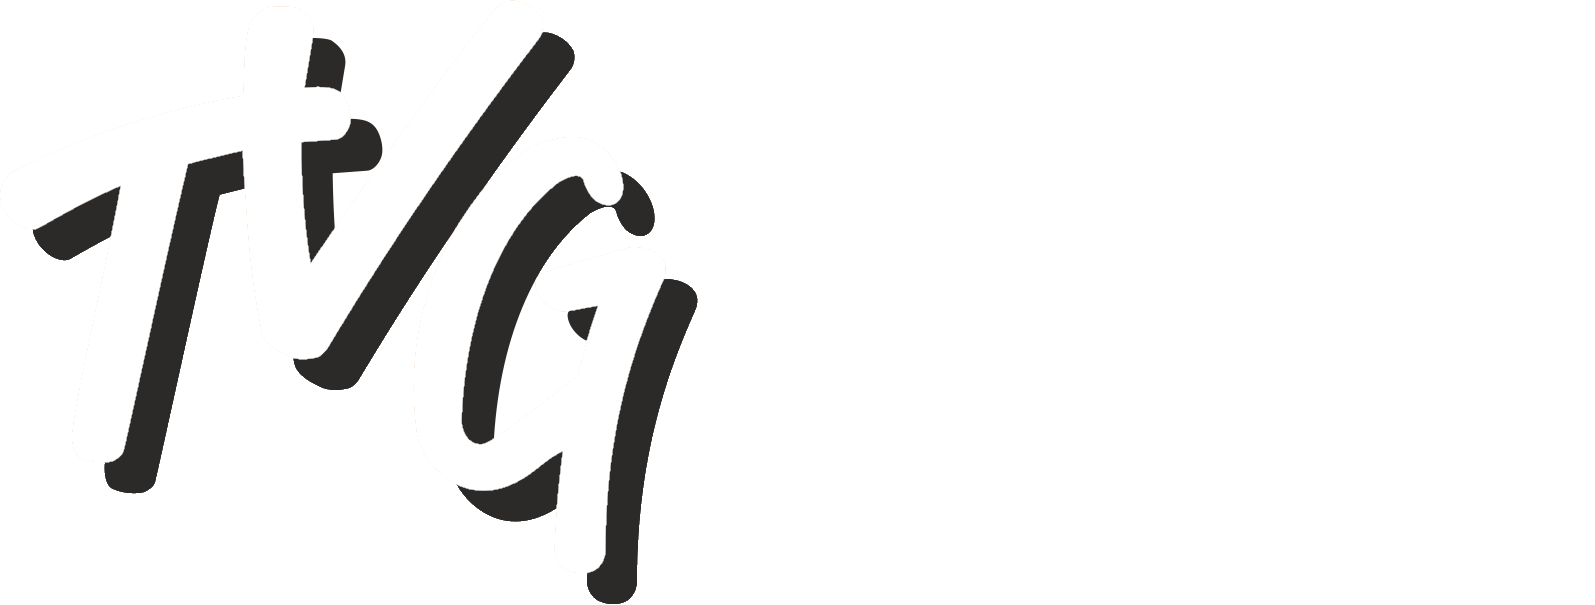 GETU TVG logo